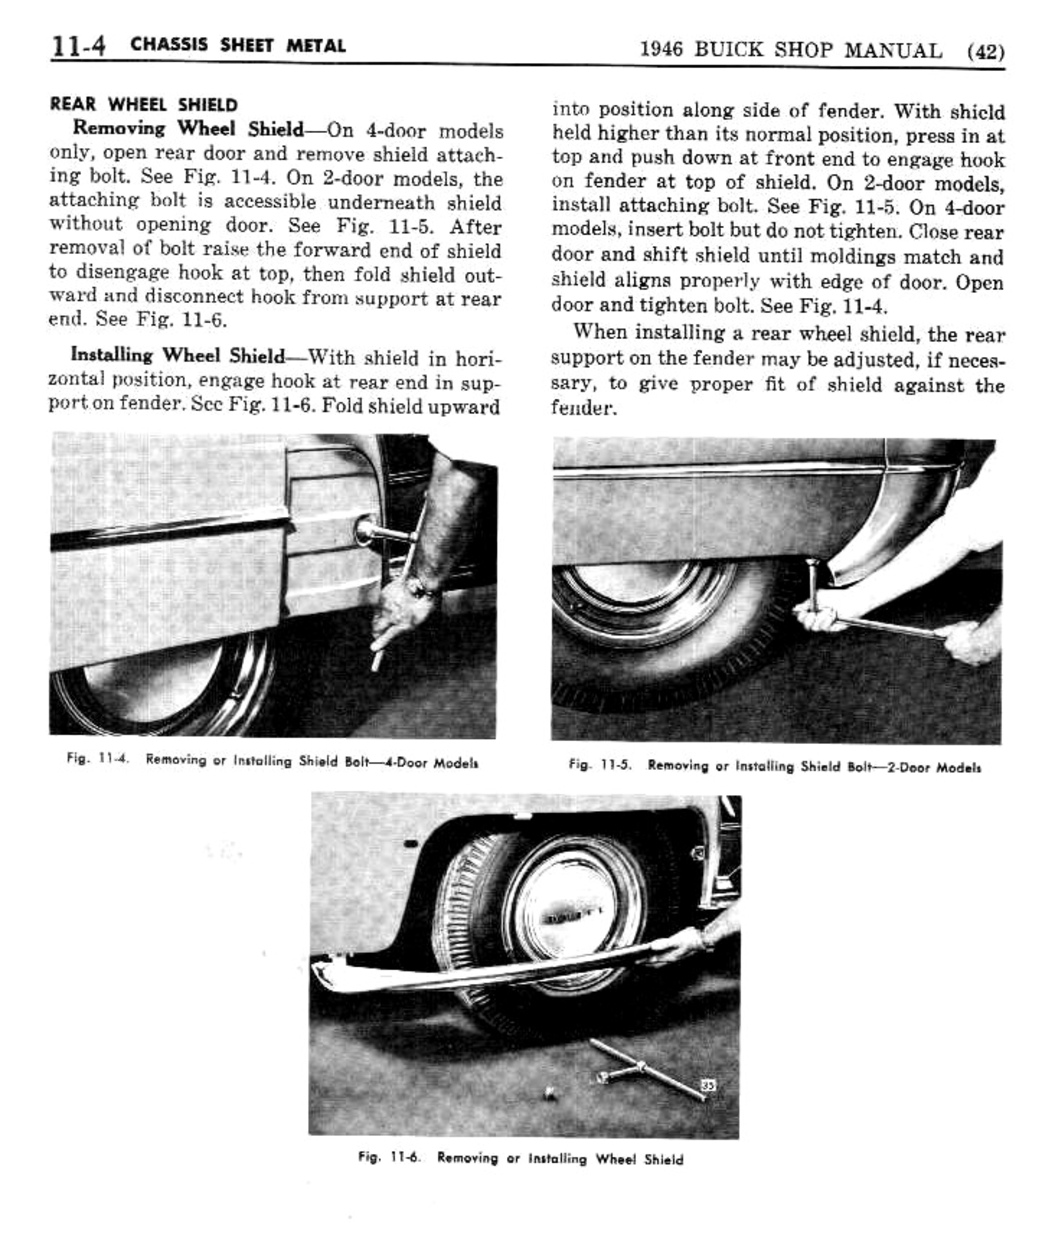 n_11 1946 Buick Shop Manual - Chassis Sheet Metal-004-004.jpg